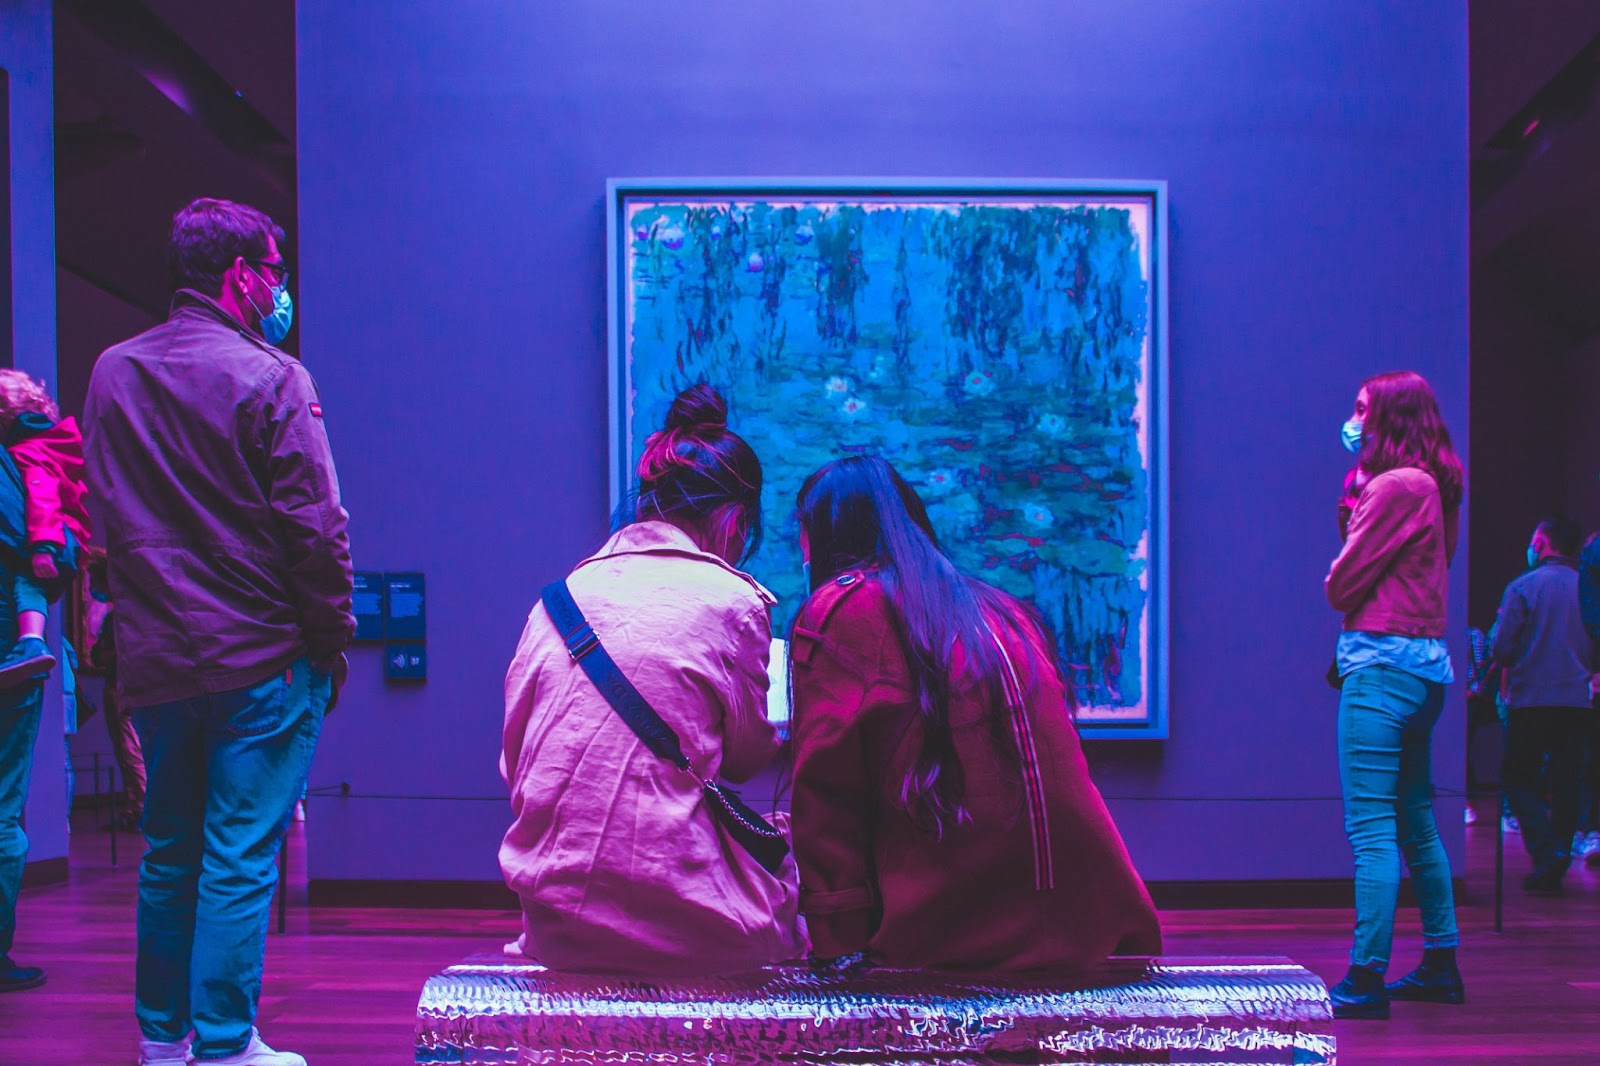 People seeing Monet’s work in the gallery